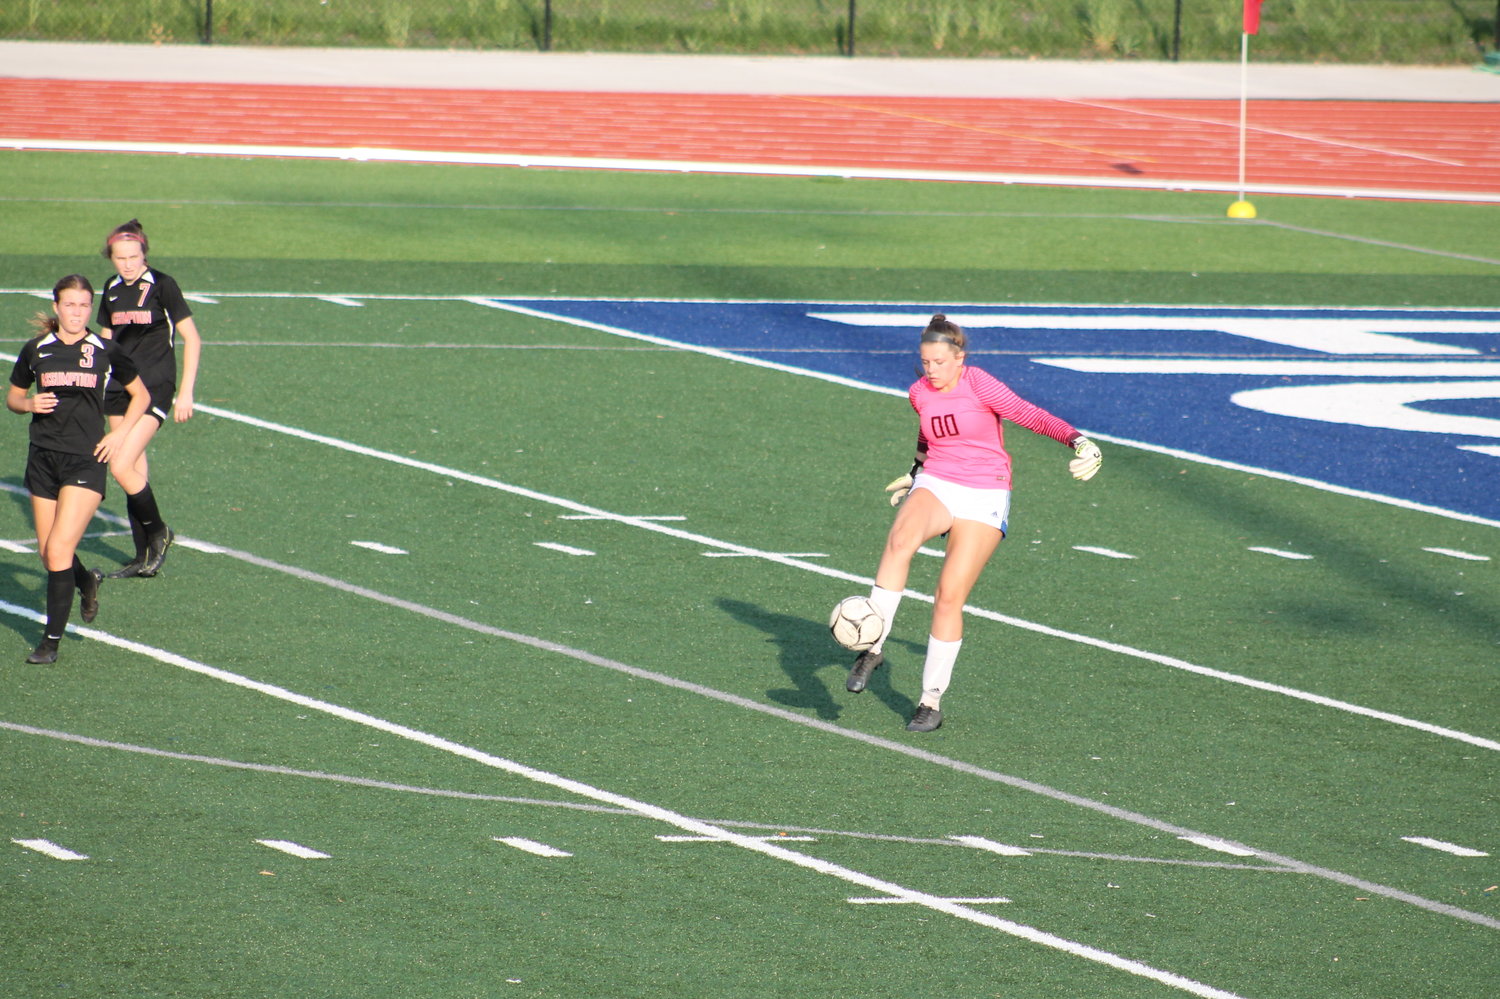 Goalie Crystal Ledezma kicks the ball away during the game.